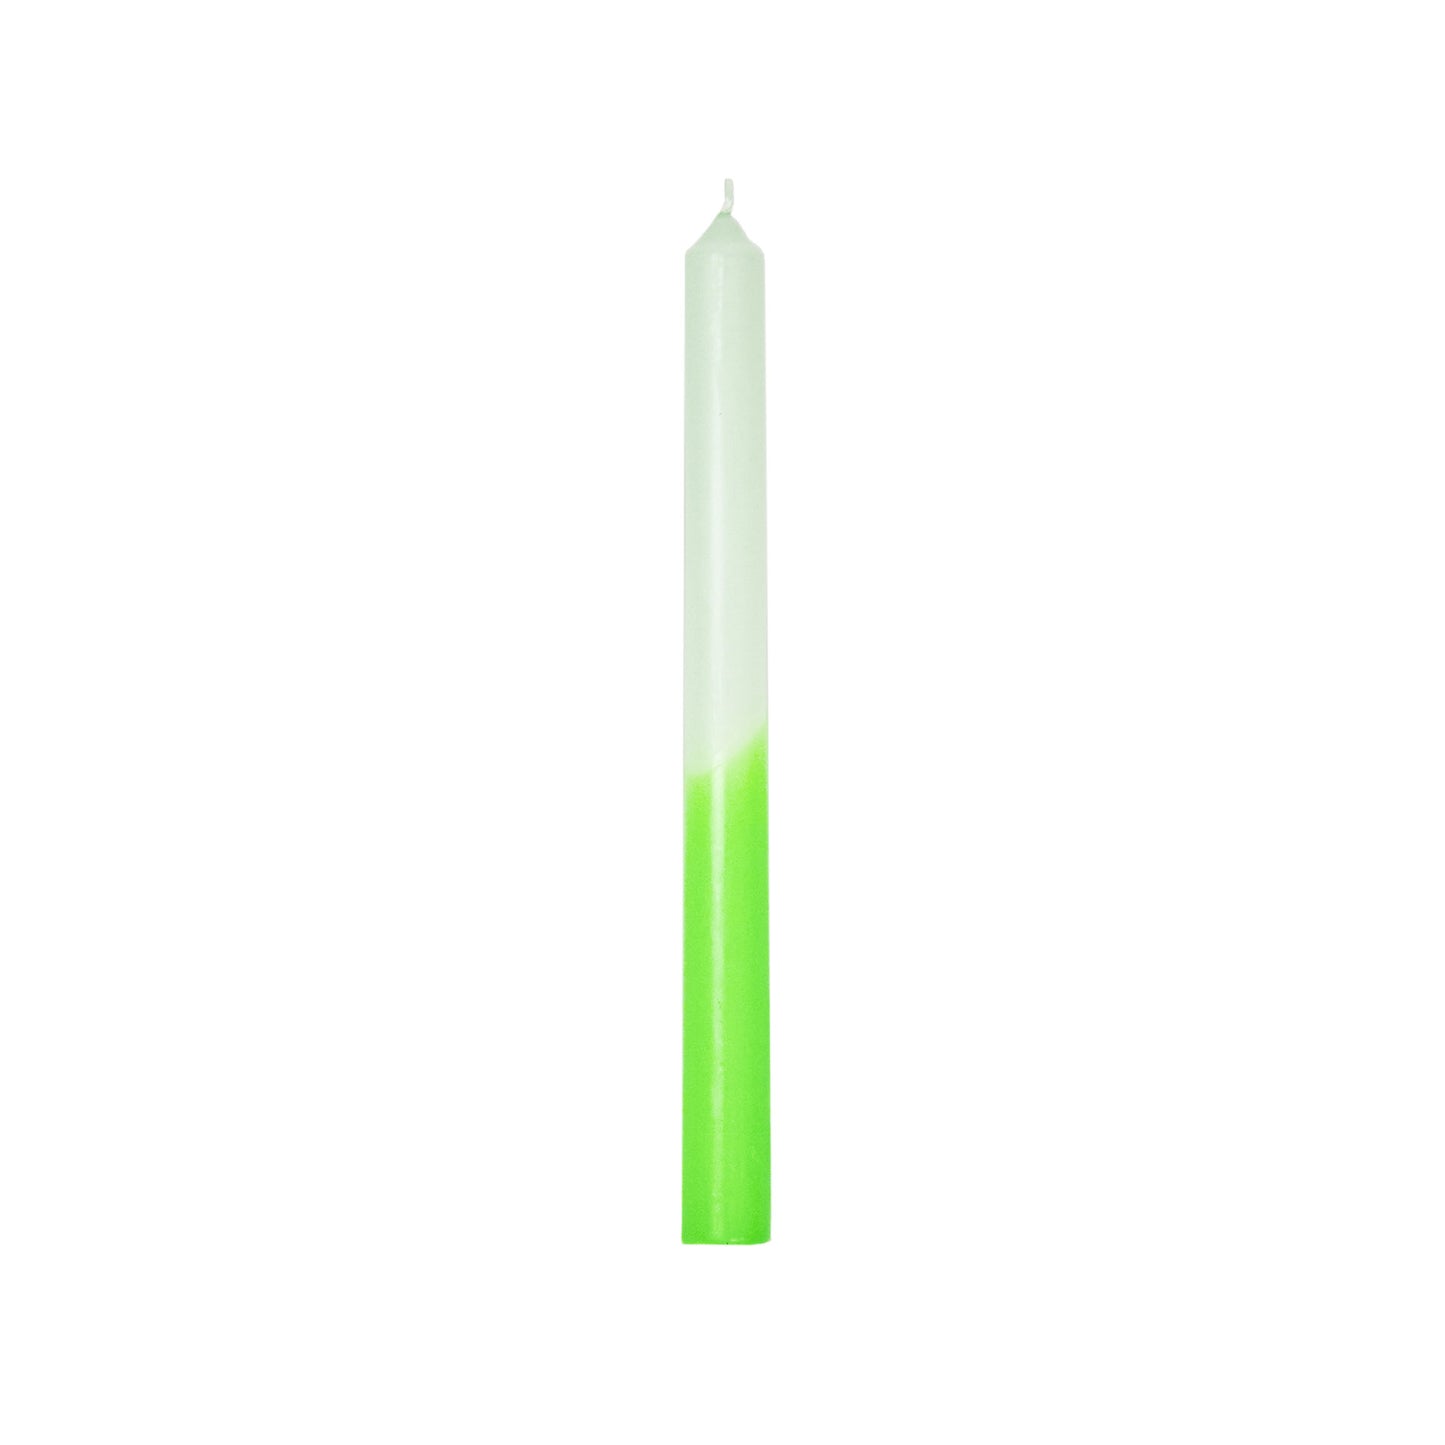 Tapers -Dipdye-Wax - Green - S4 - 25,8x9,5x2,5cm